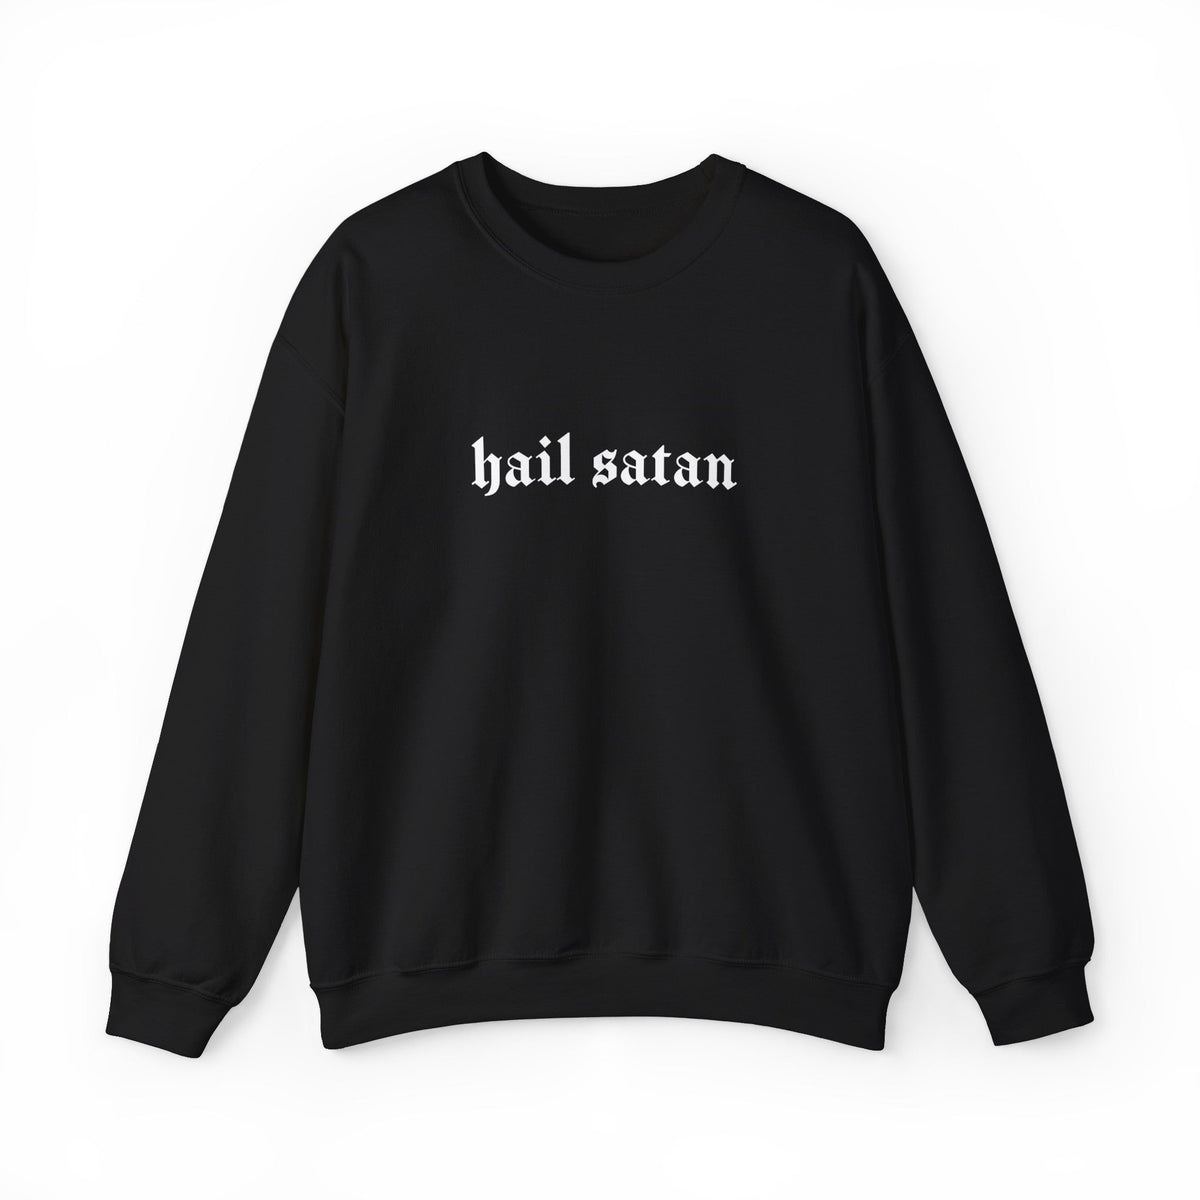 Hail Satan Goth Long Sleeve Crew Neck Sweatshirt - Goth Cloth Co.Sweatshirt12862250125149633286